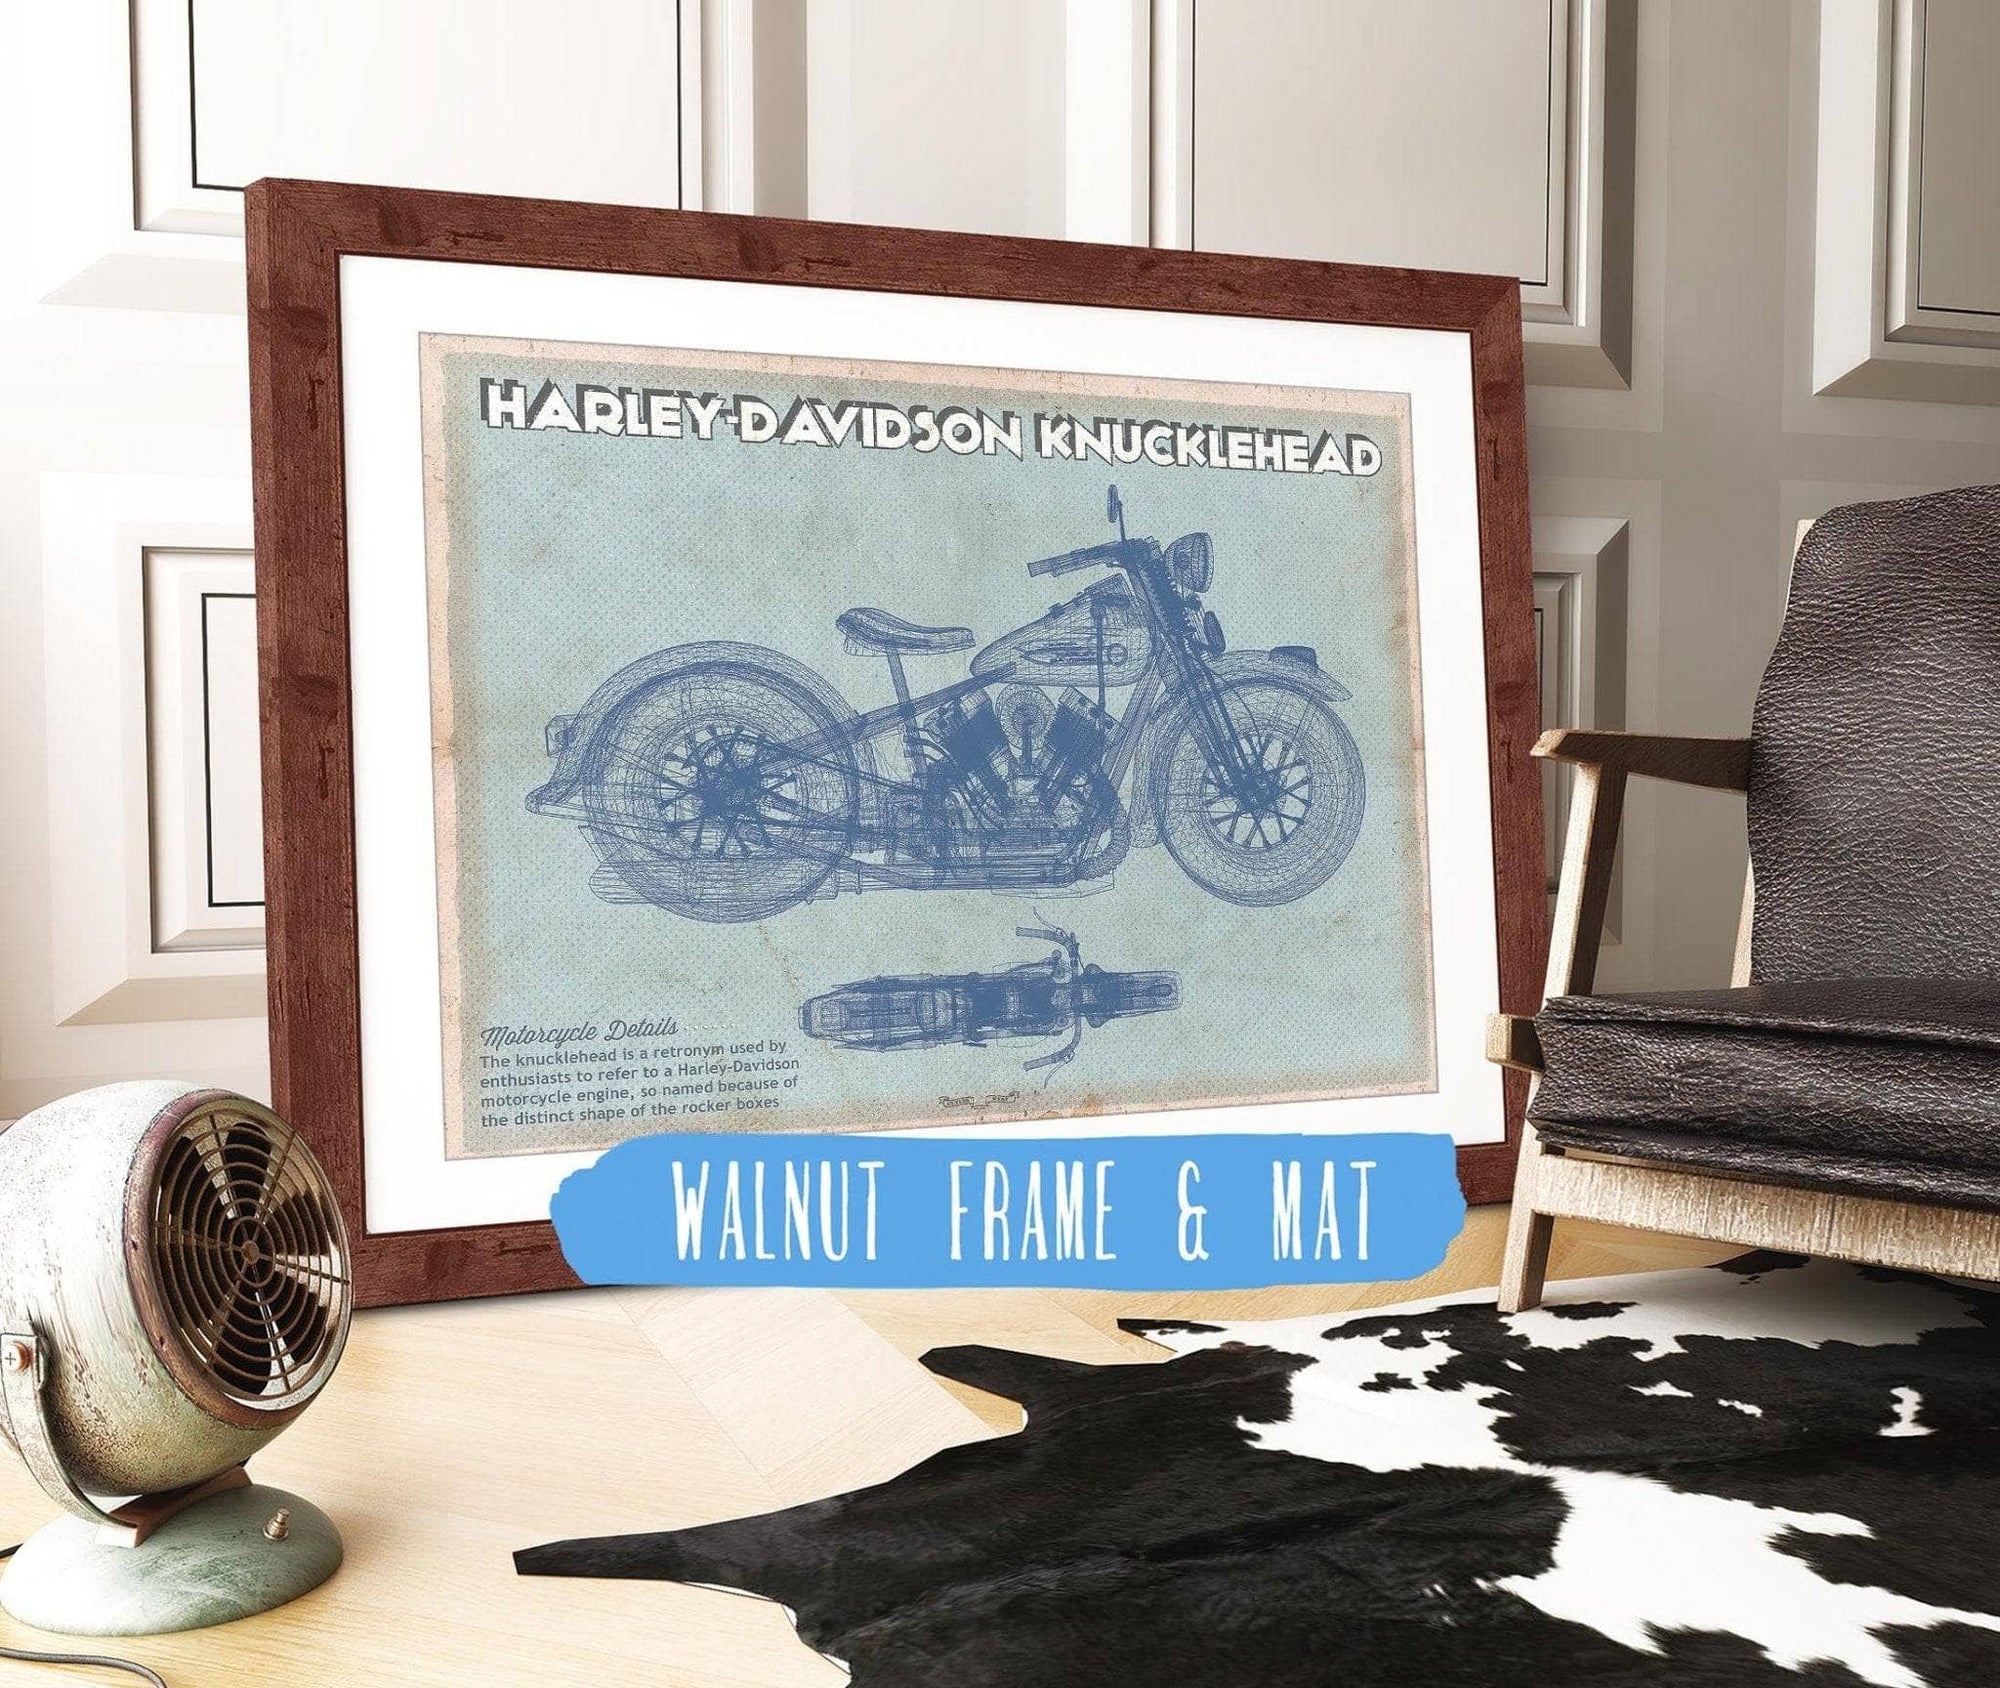 Cutler West 14" x 11" / Walnut Frame & Mat Harley-Davidson Knucklehead Blueprint Motorcycle Patent Print 835000030_63986